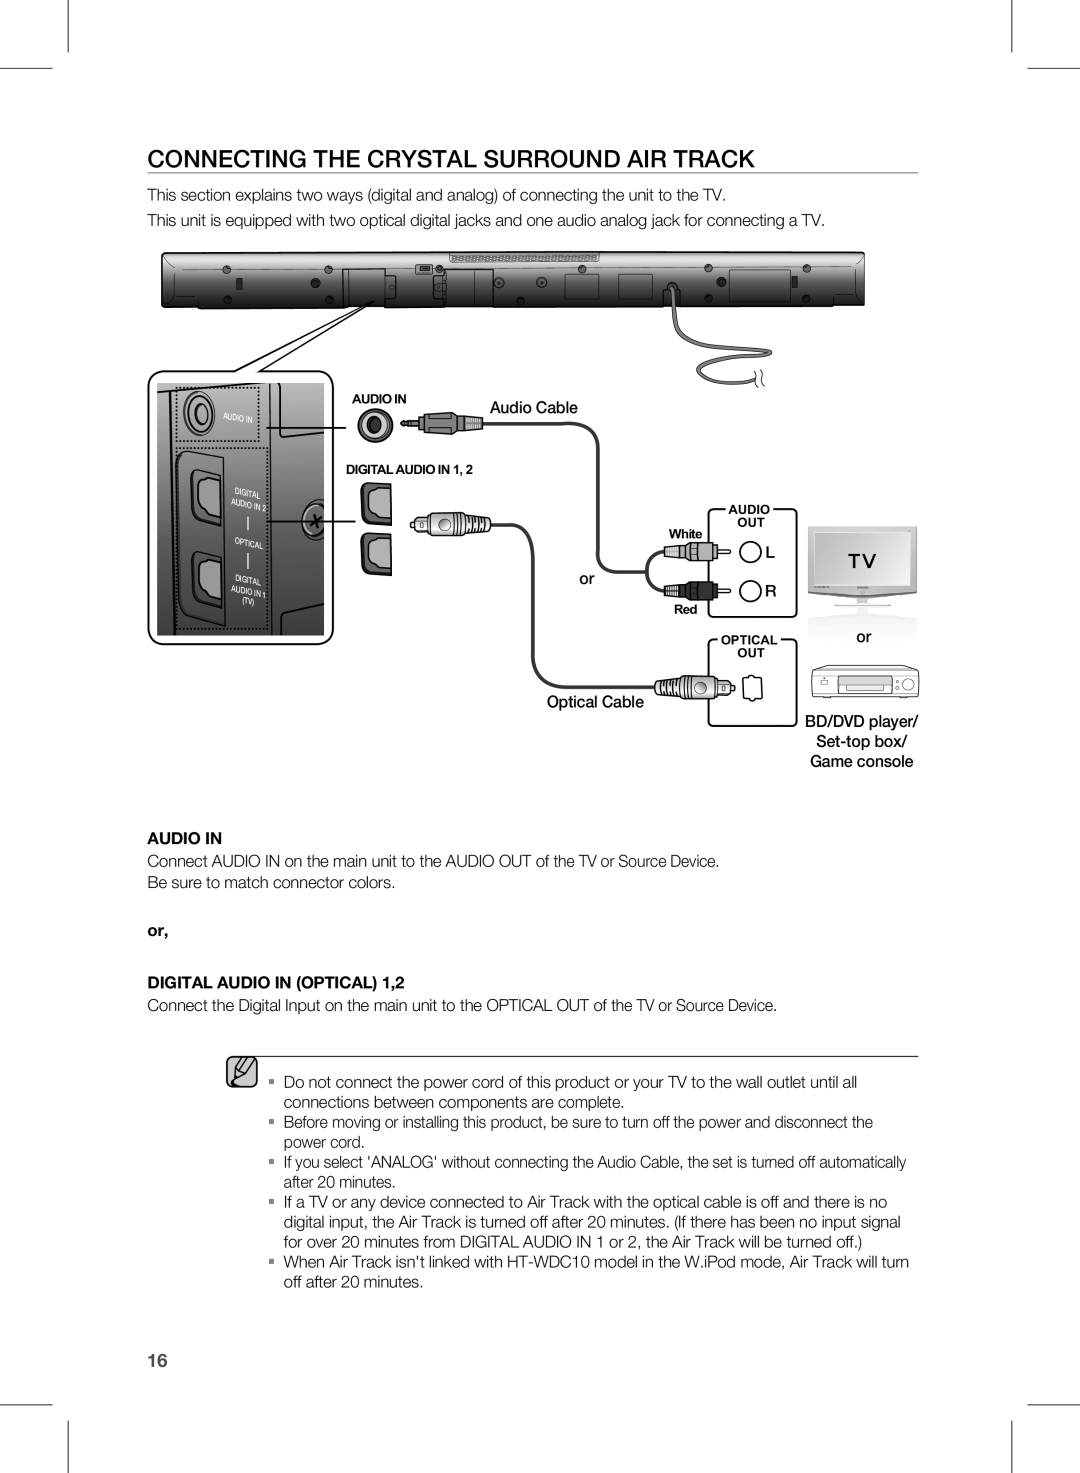 Samsung HW-D551, HW-D550 user manual Audio In, or DIGITAL AUDIO IN OPTICAL 1,2 